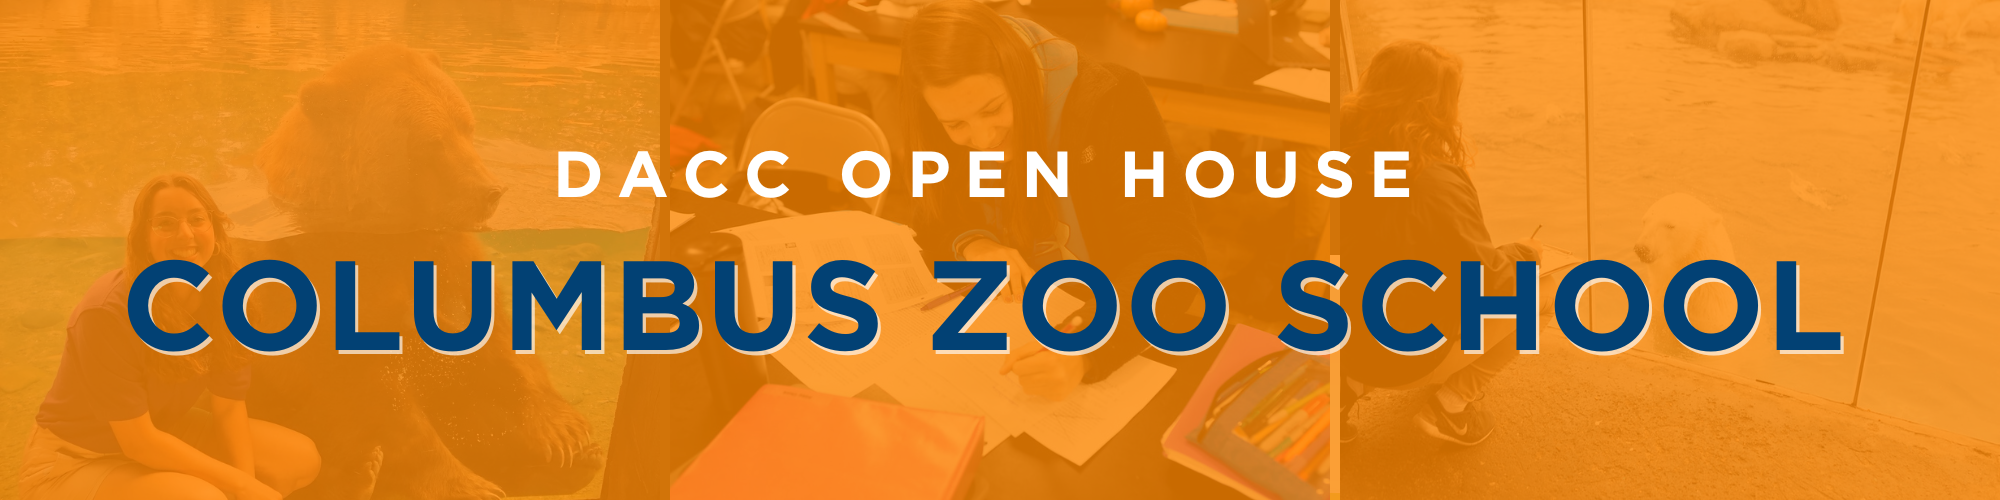 Zoo School Open House